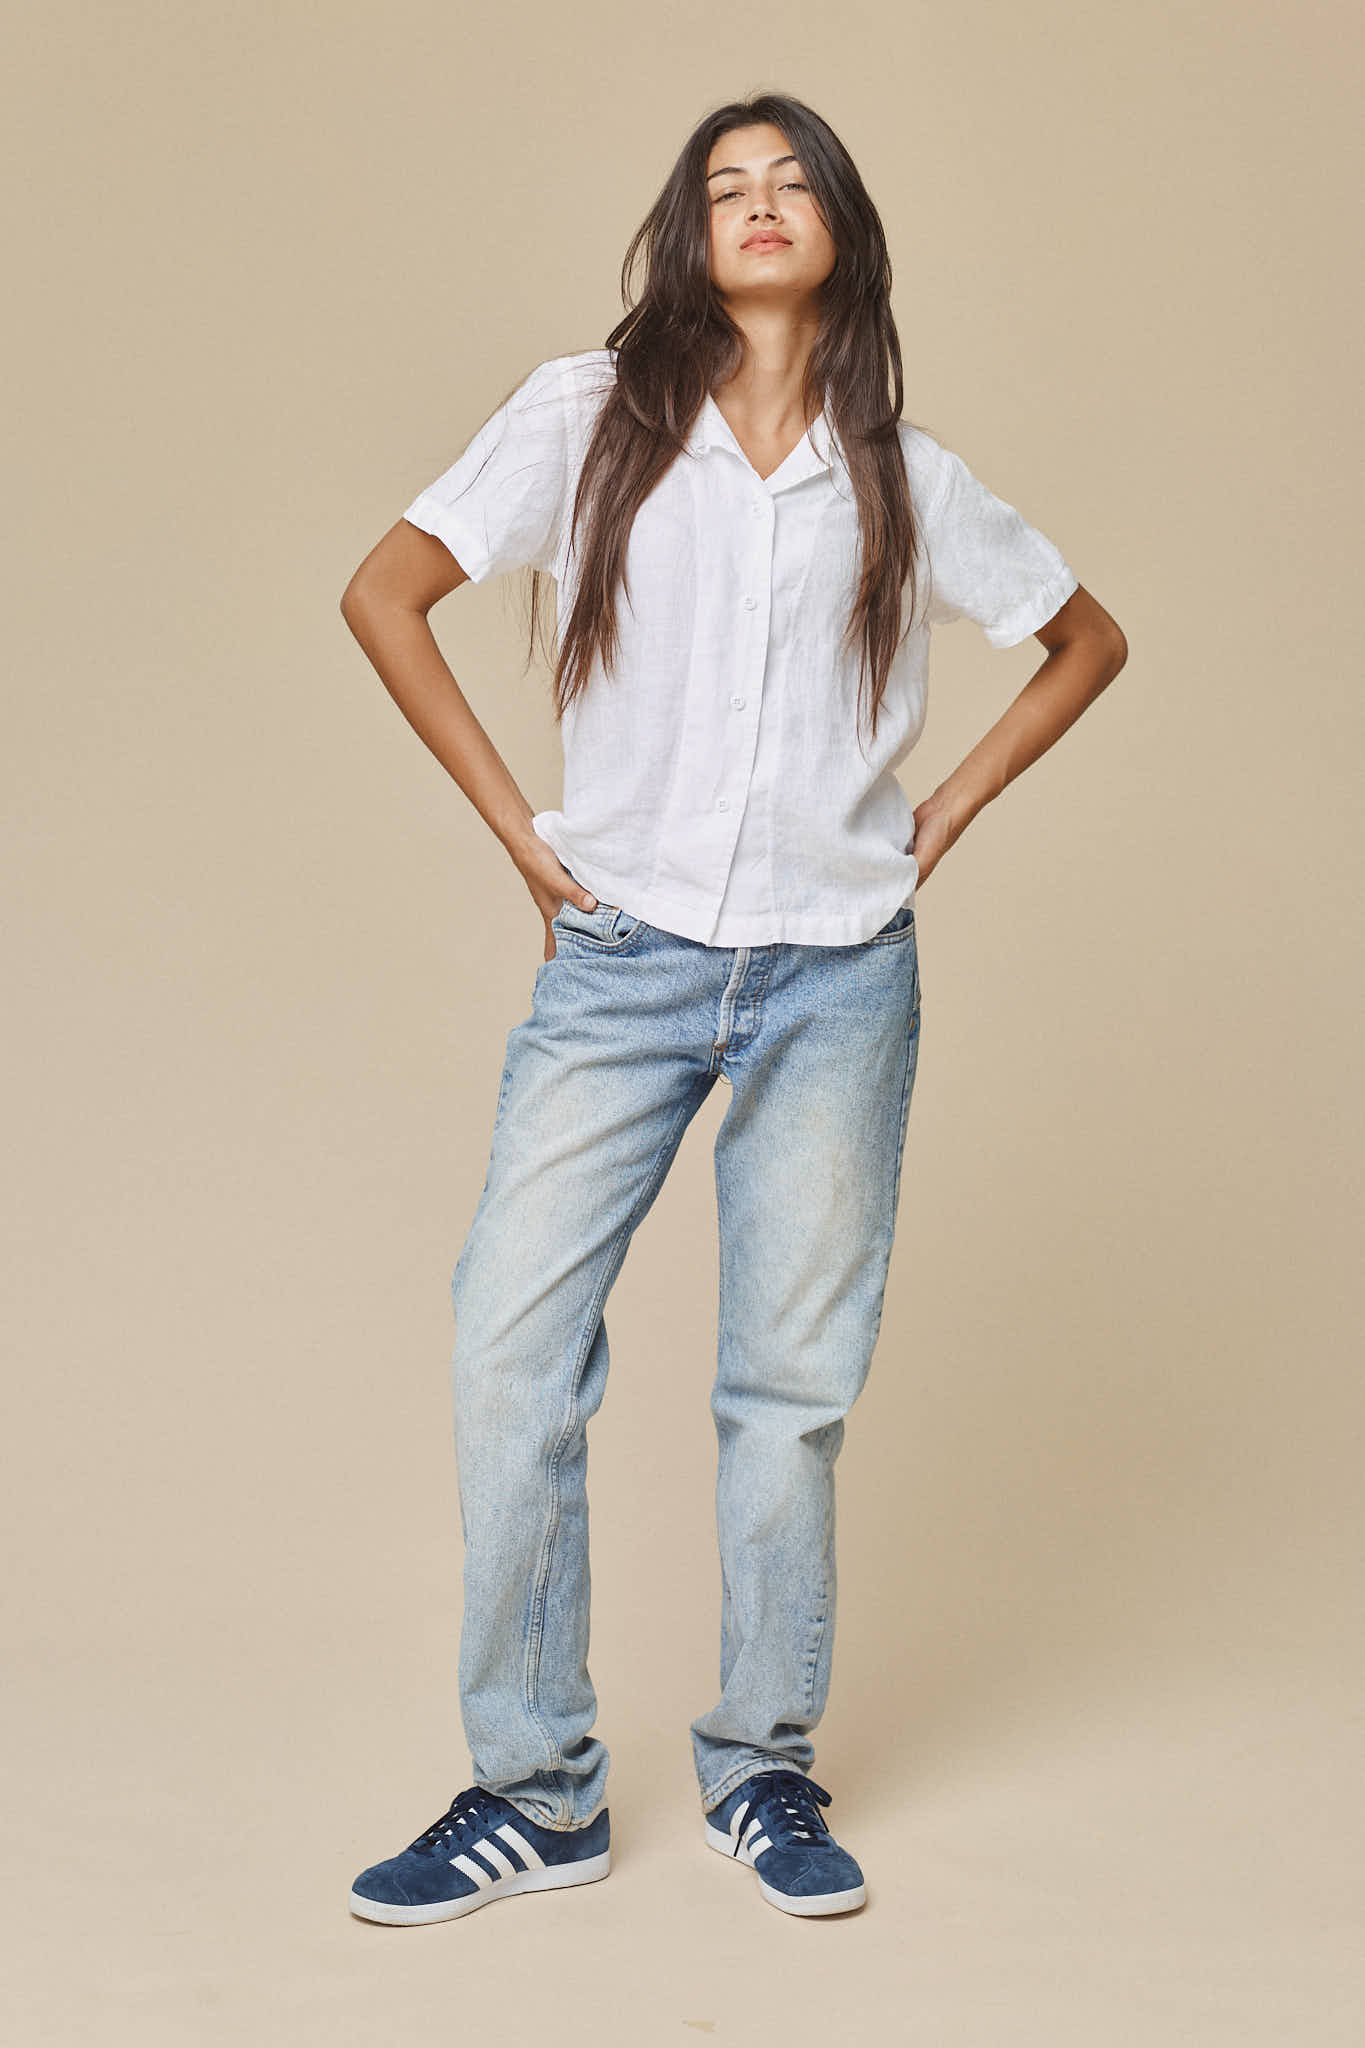 Tucson Shirt | Jungmaven Hemp Clothing & Accessories / model_desc: Meeya is  5’6” wearing XS